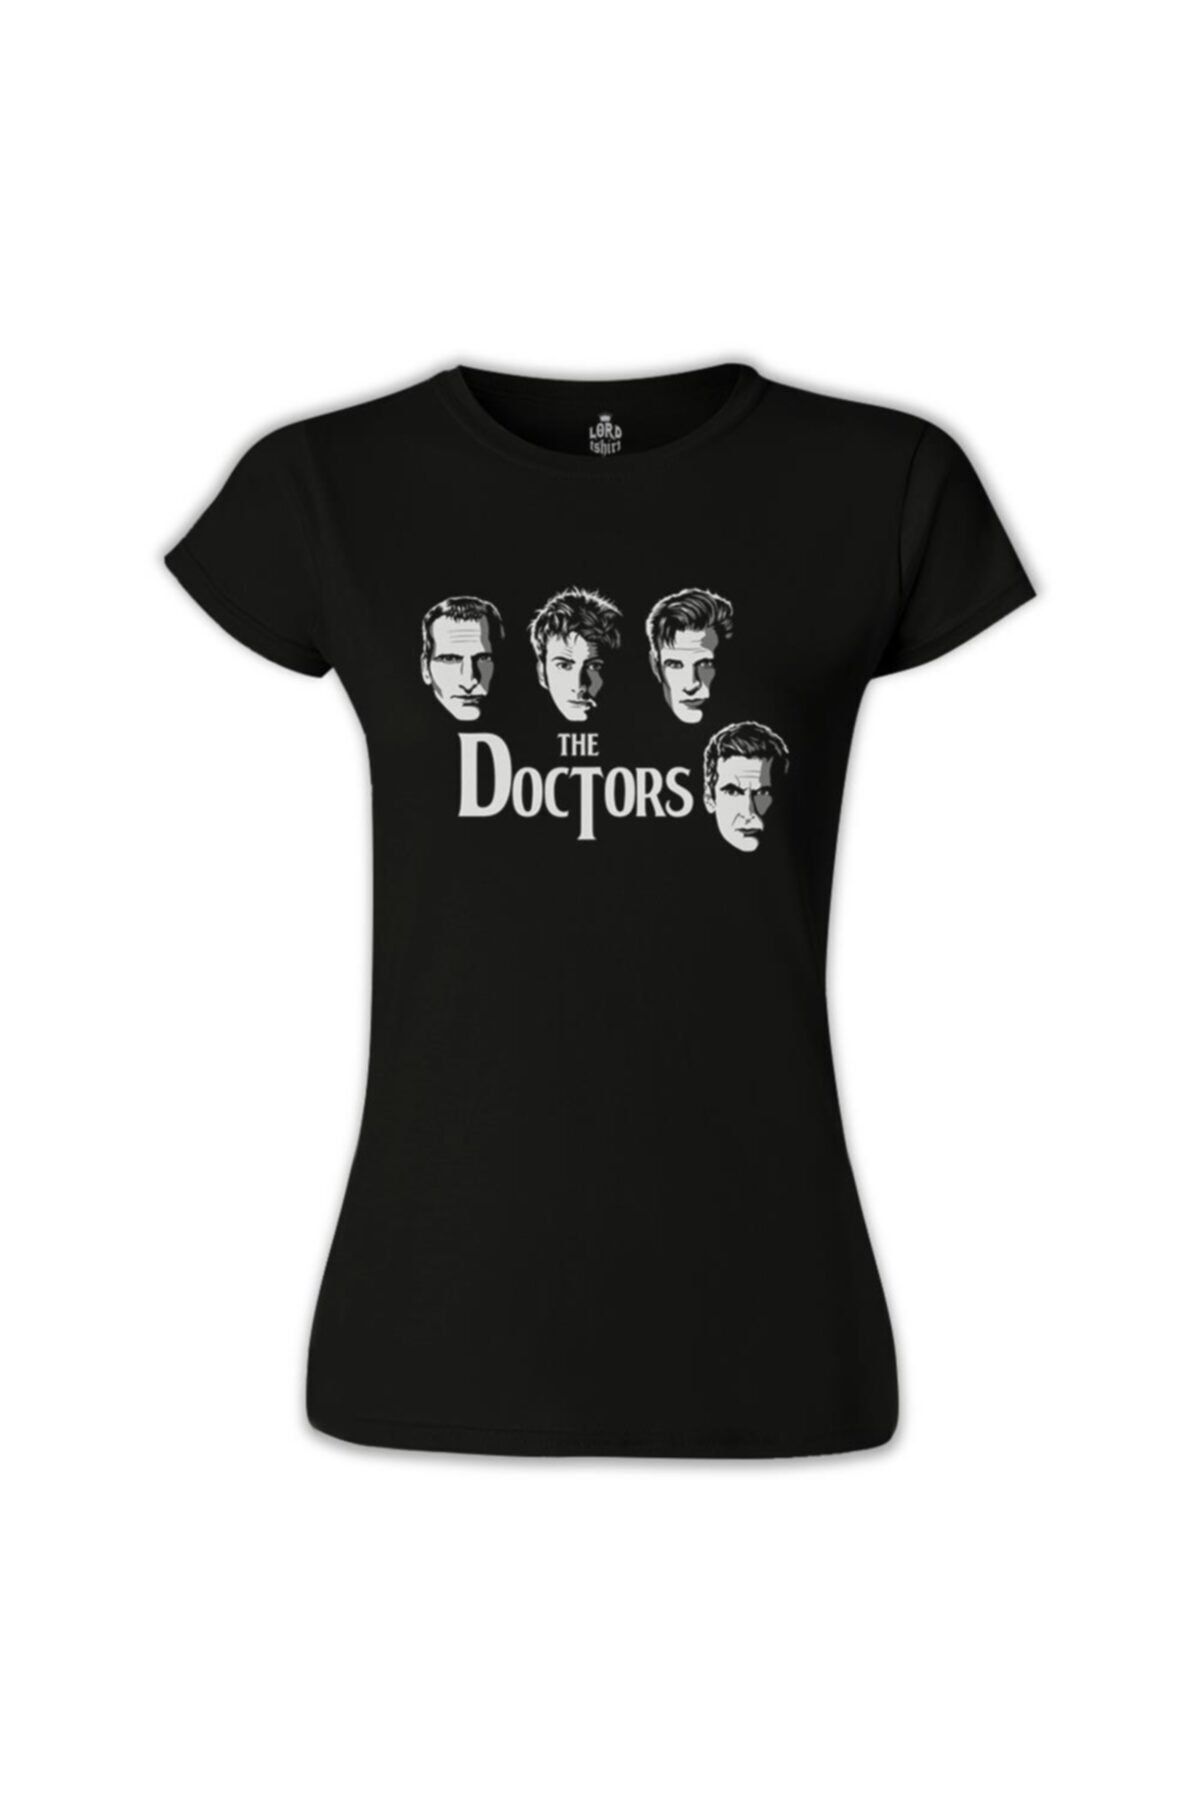 Lord T-Shirt Kadın Siyah Doctor Who The Doctors Baskılı Tshirt